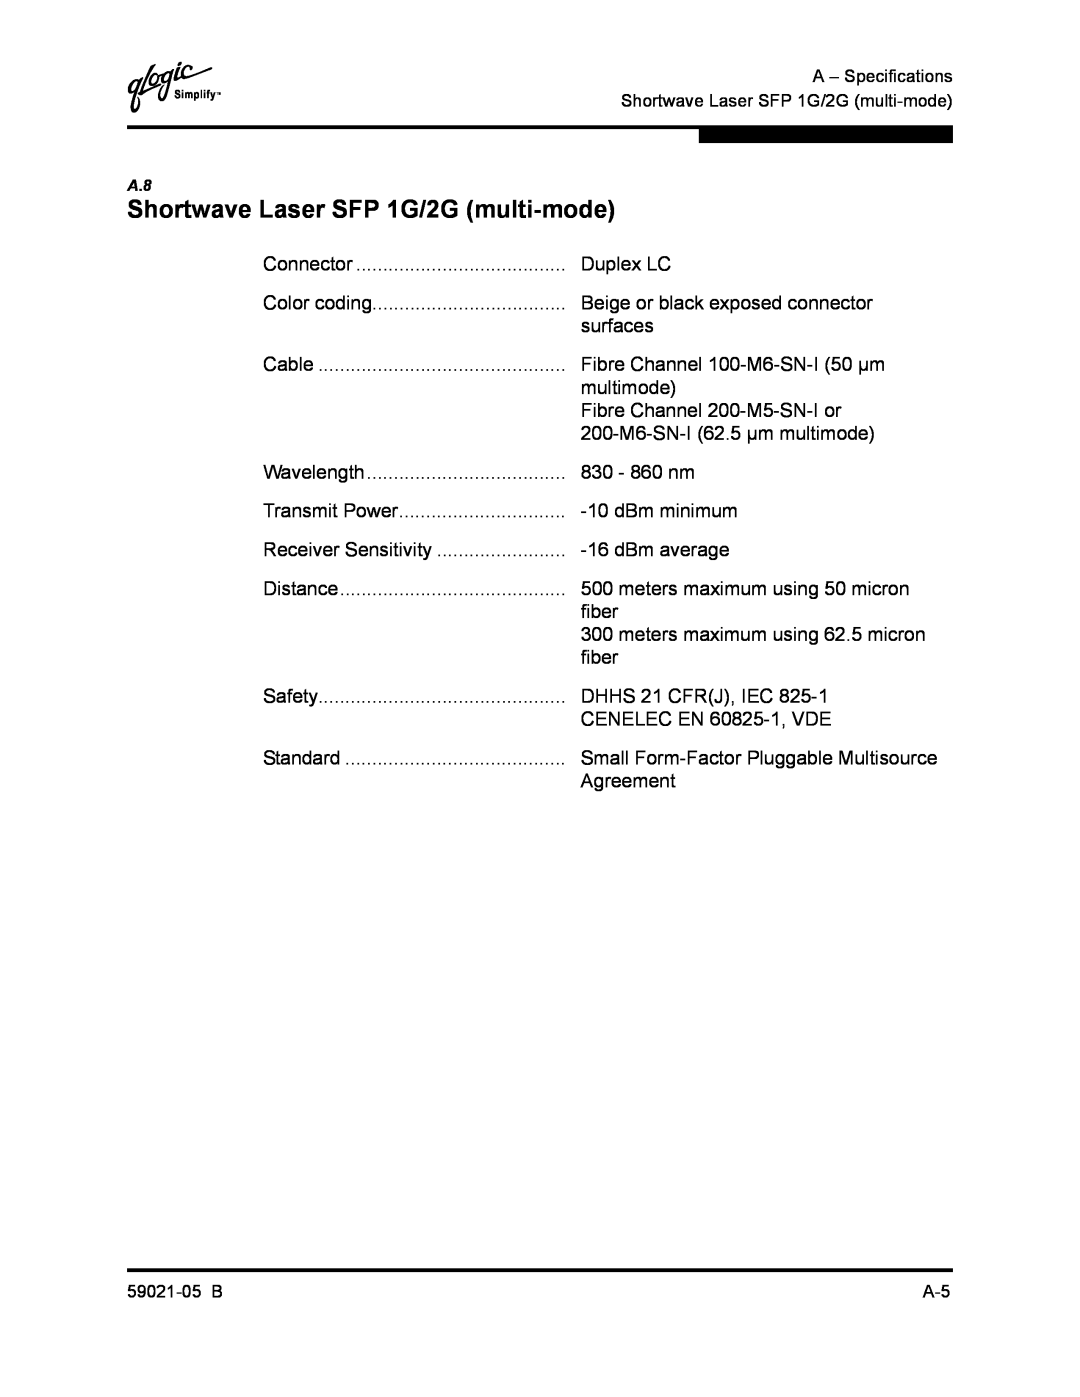 Q-Logic 59021-05 B manual Shortwave Laser SFP 1G/2G multi-mode 